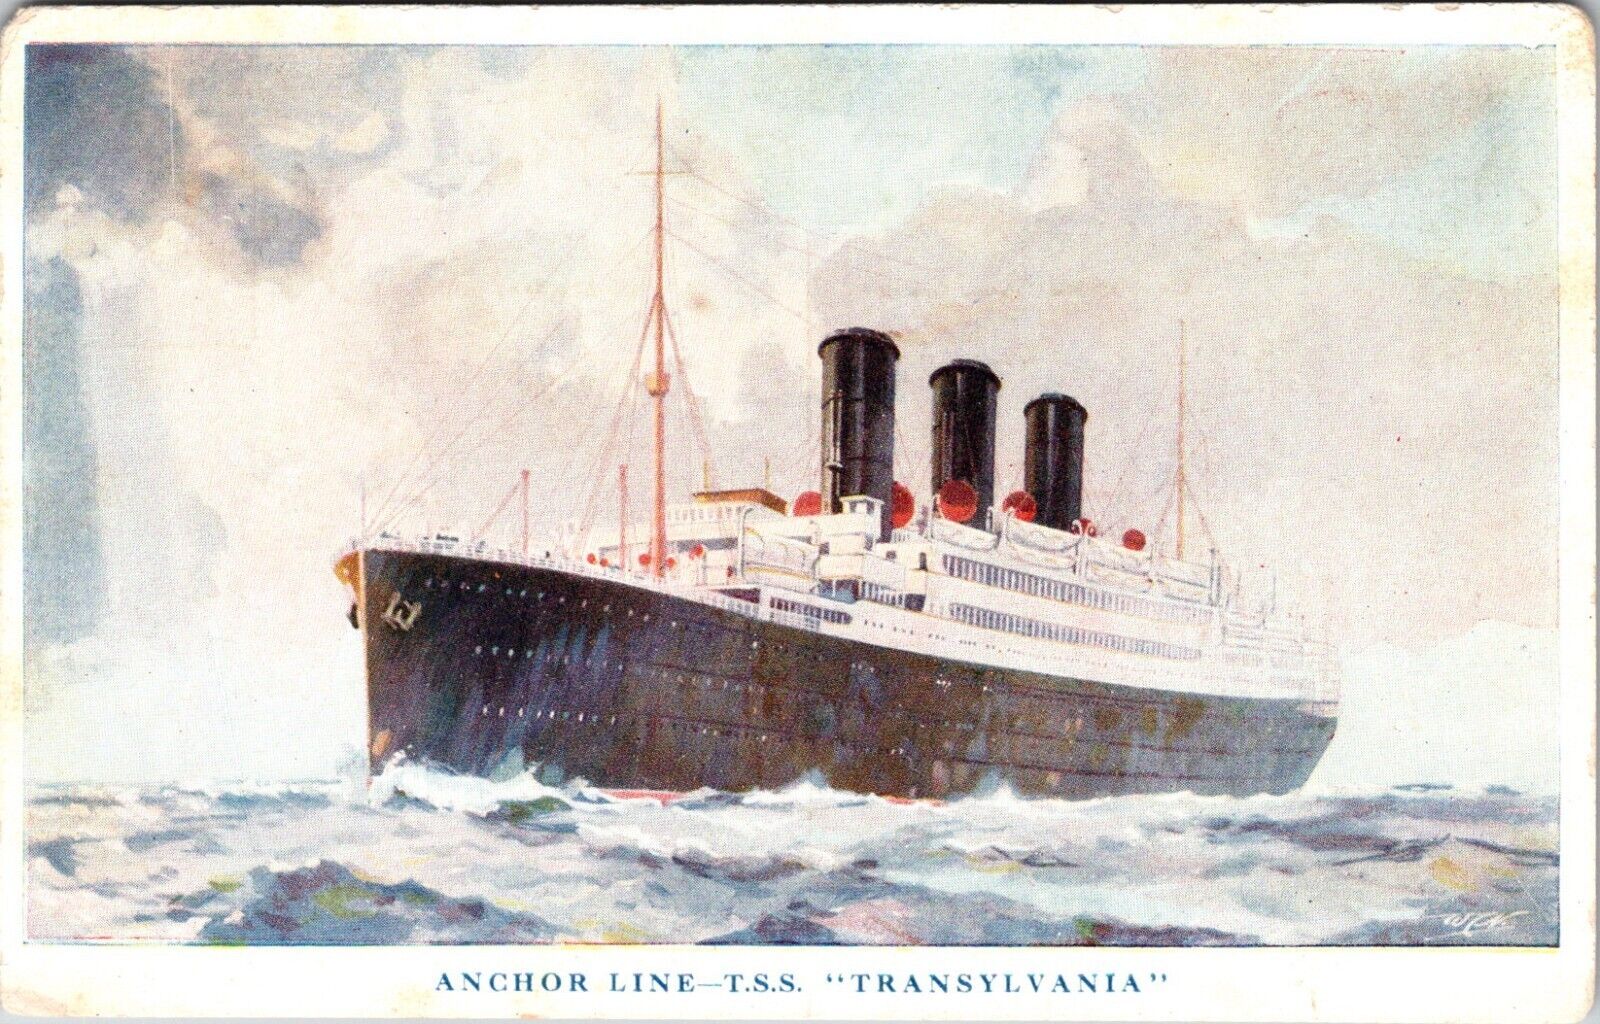 T.S.S. Transylvania British Ocean Liner Postcard Anchor Line Built 1925